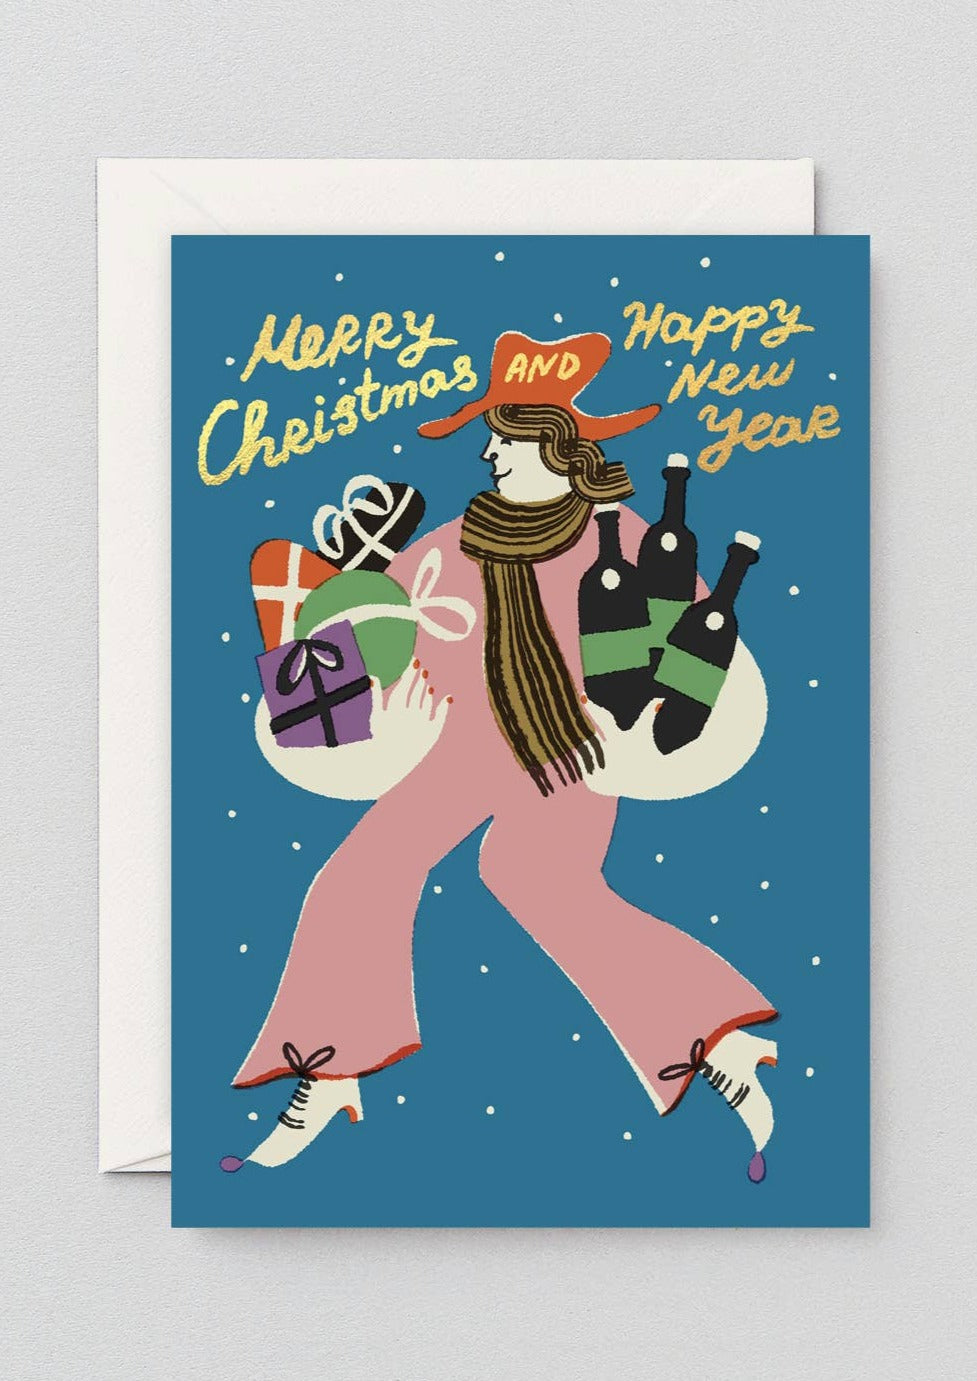 Merry Christmas Celebration Greeting Card